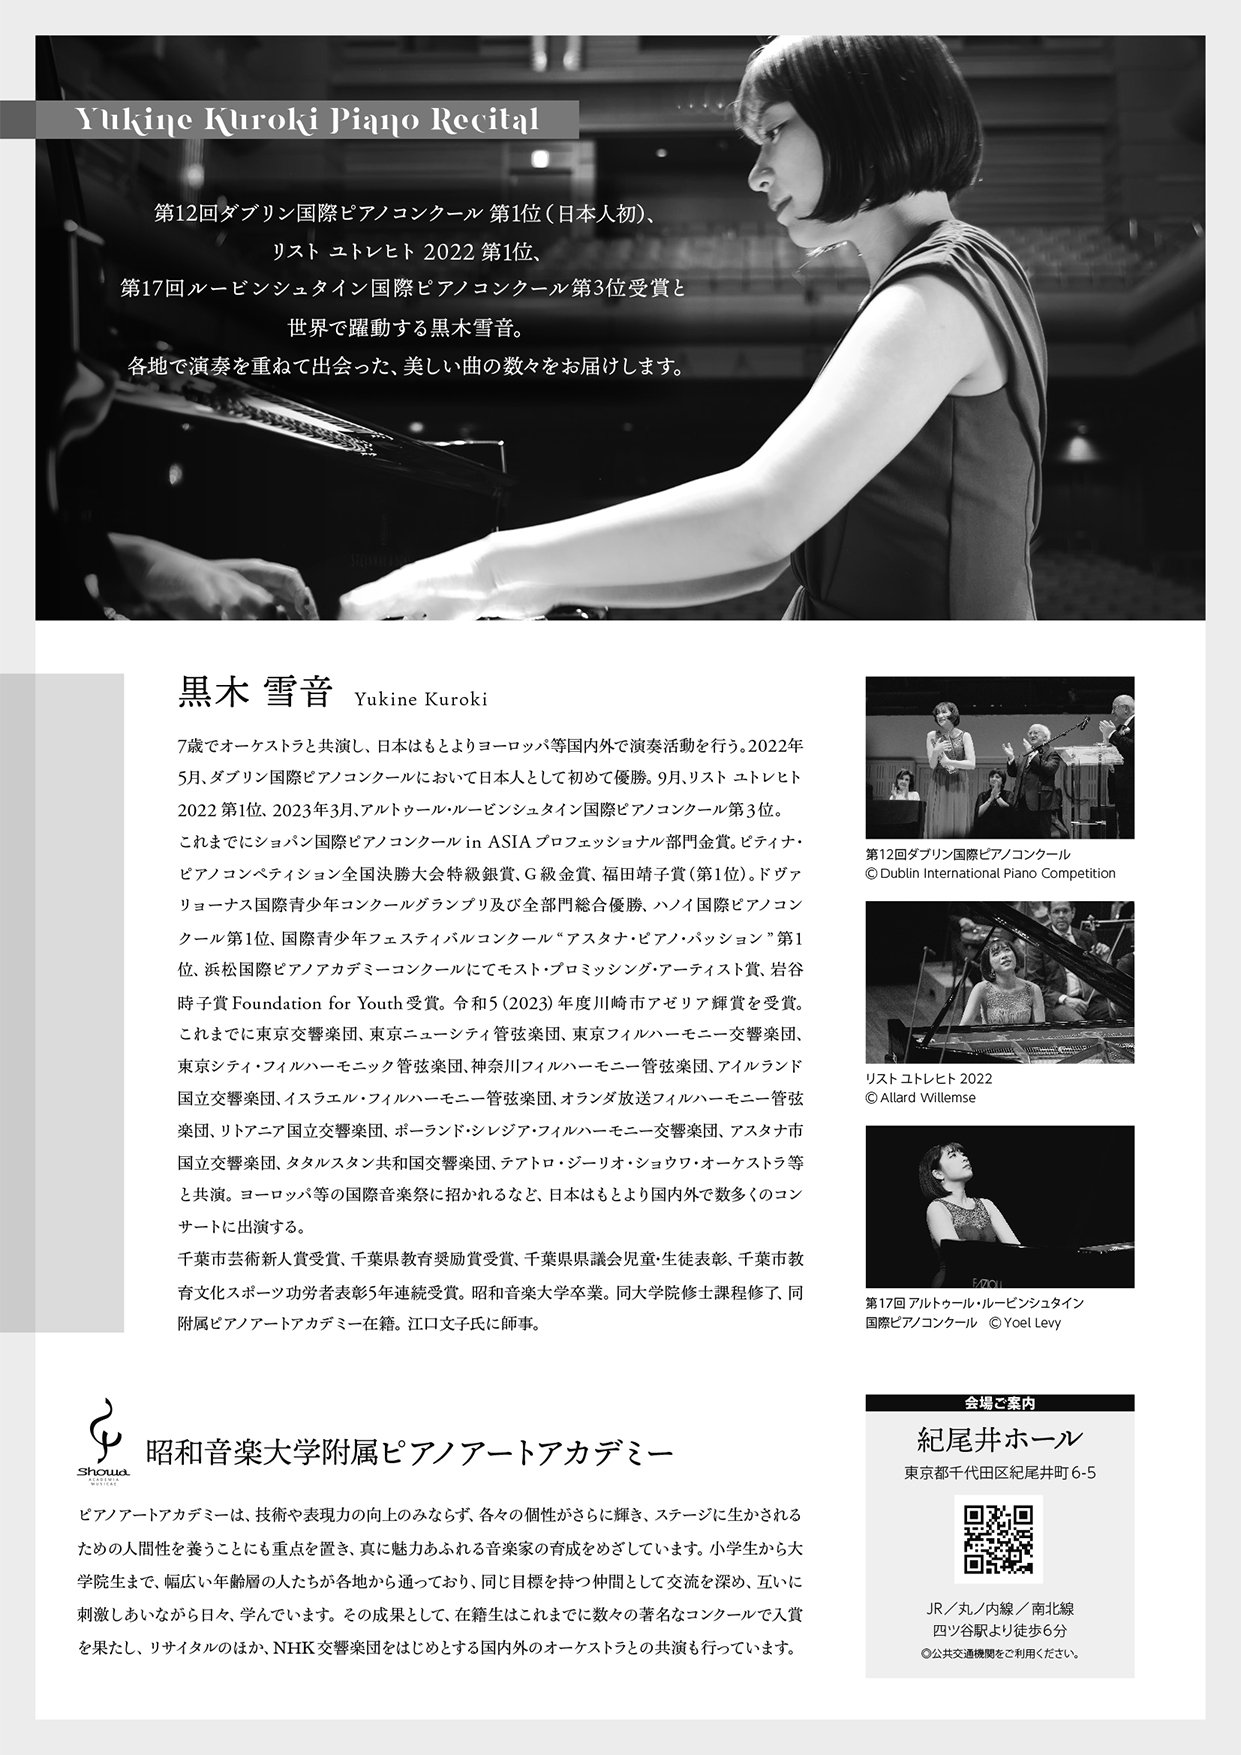 YukineKuroki recital 2403_ura.jpg